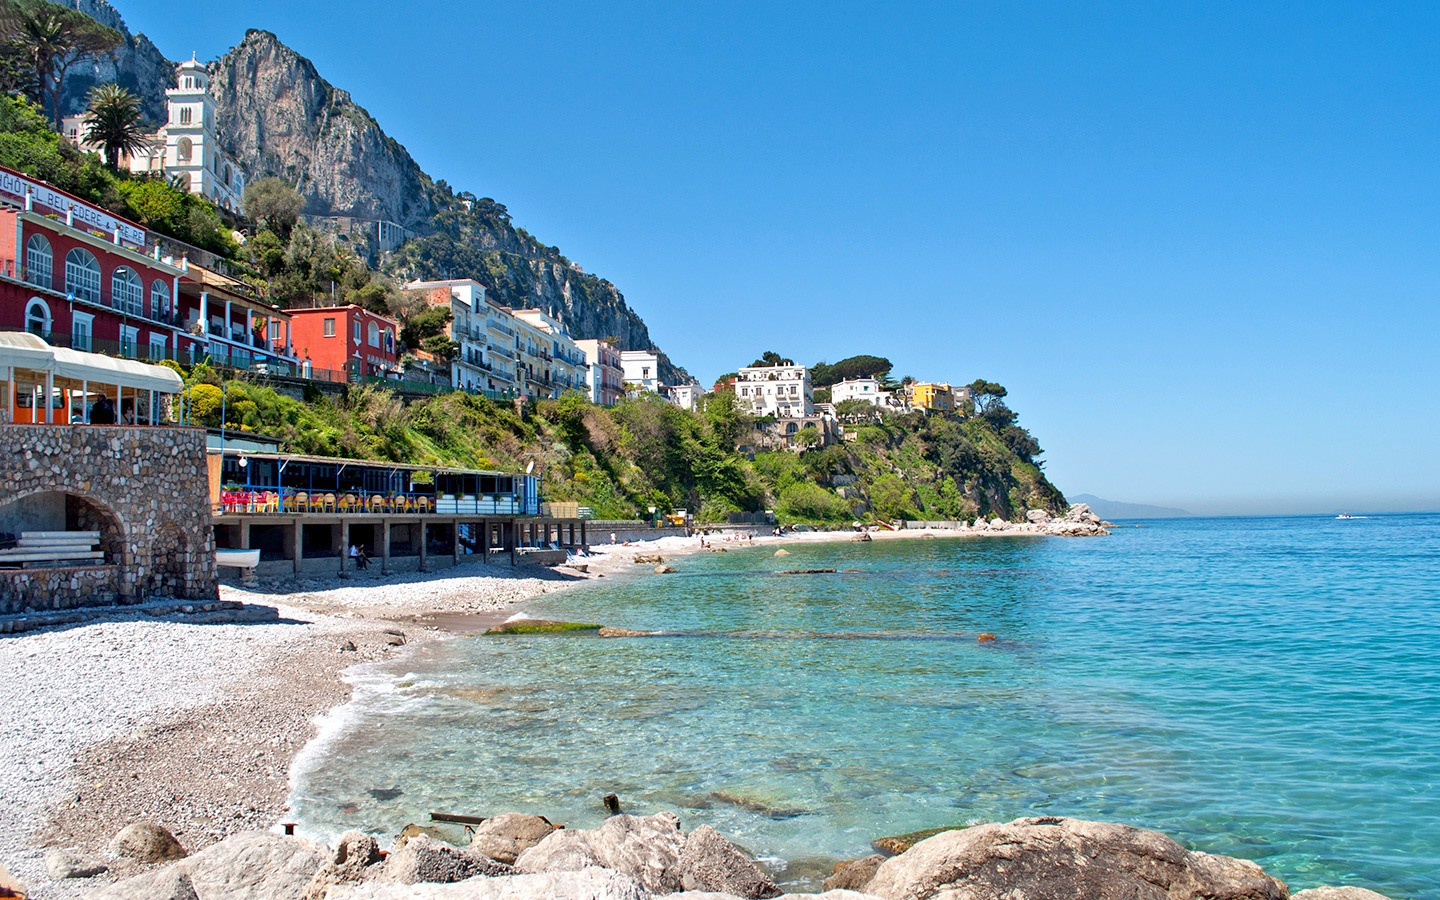 Beaches on the island of Capri, Italy